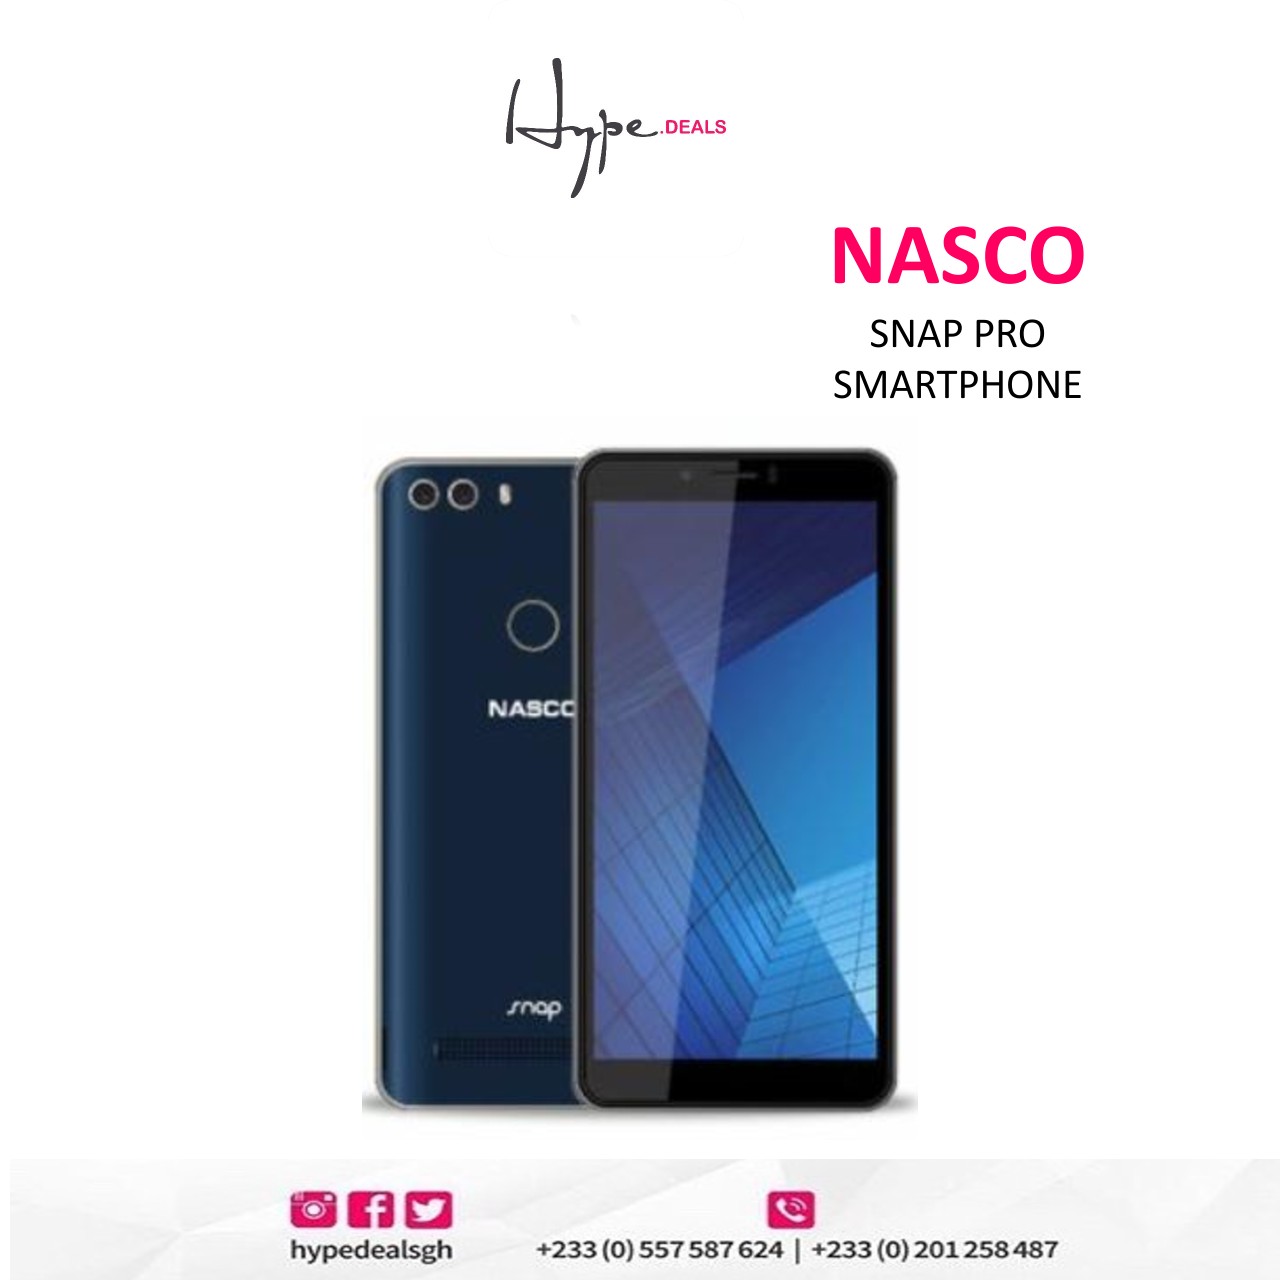 Nasco Snap Pro Smartphone